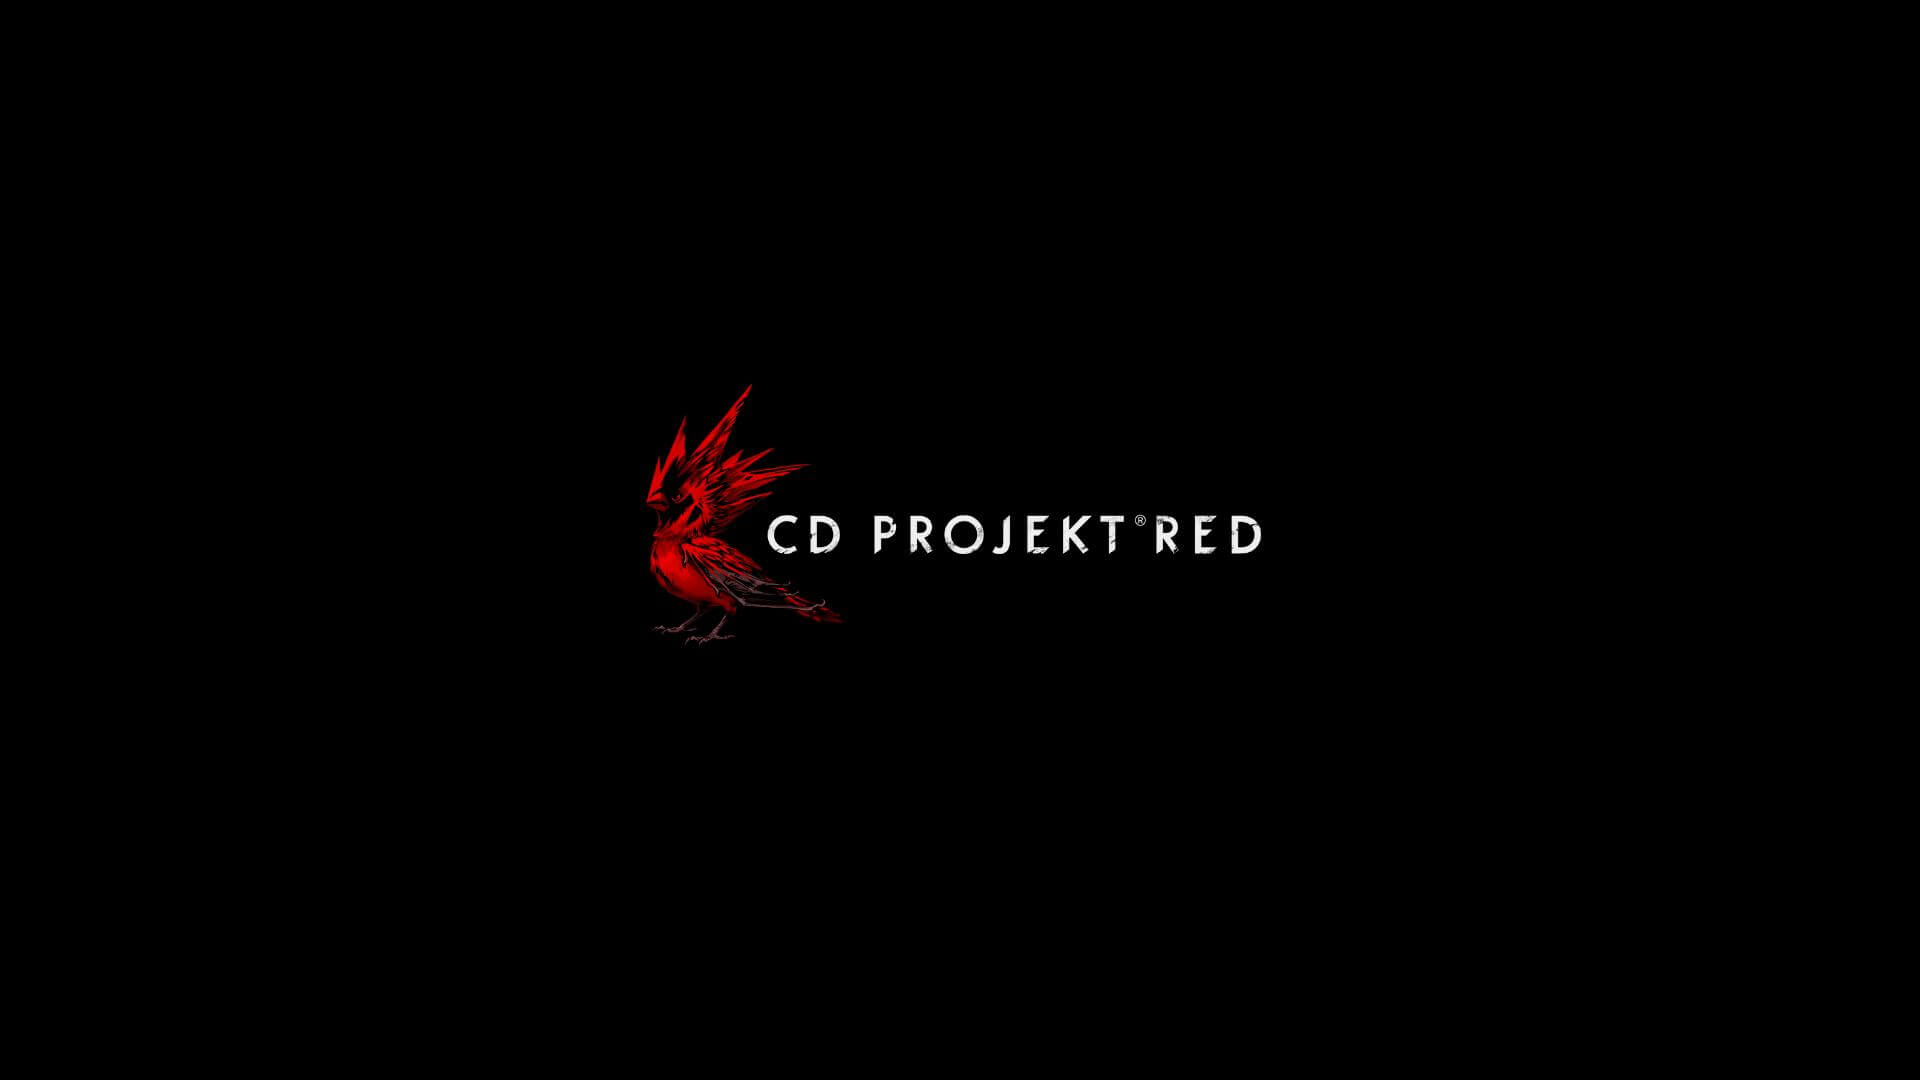 CD Projekt Red Logo Image